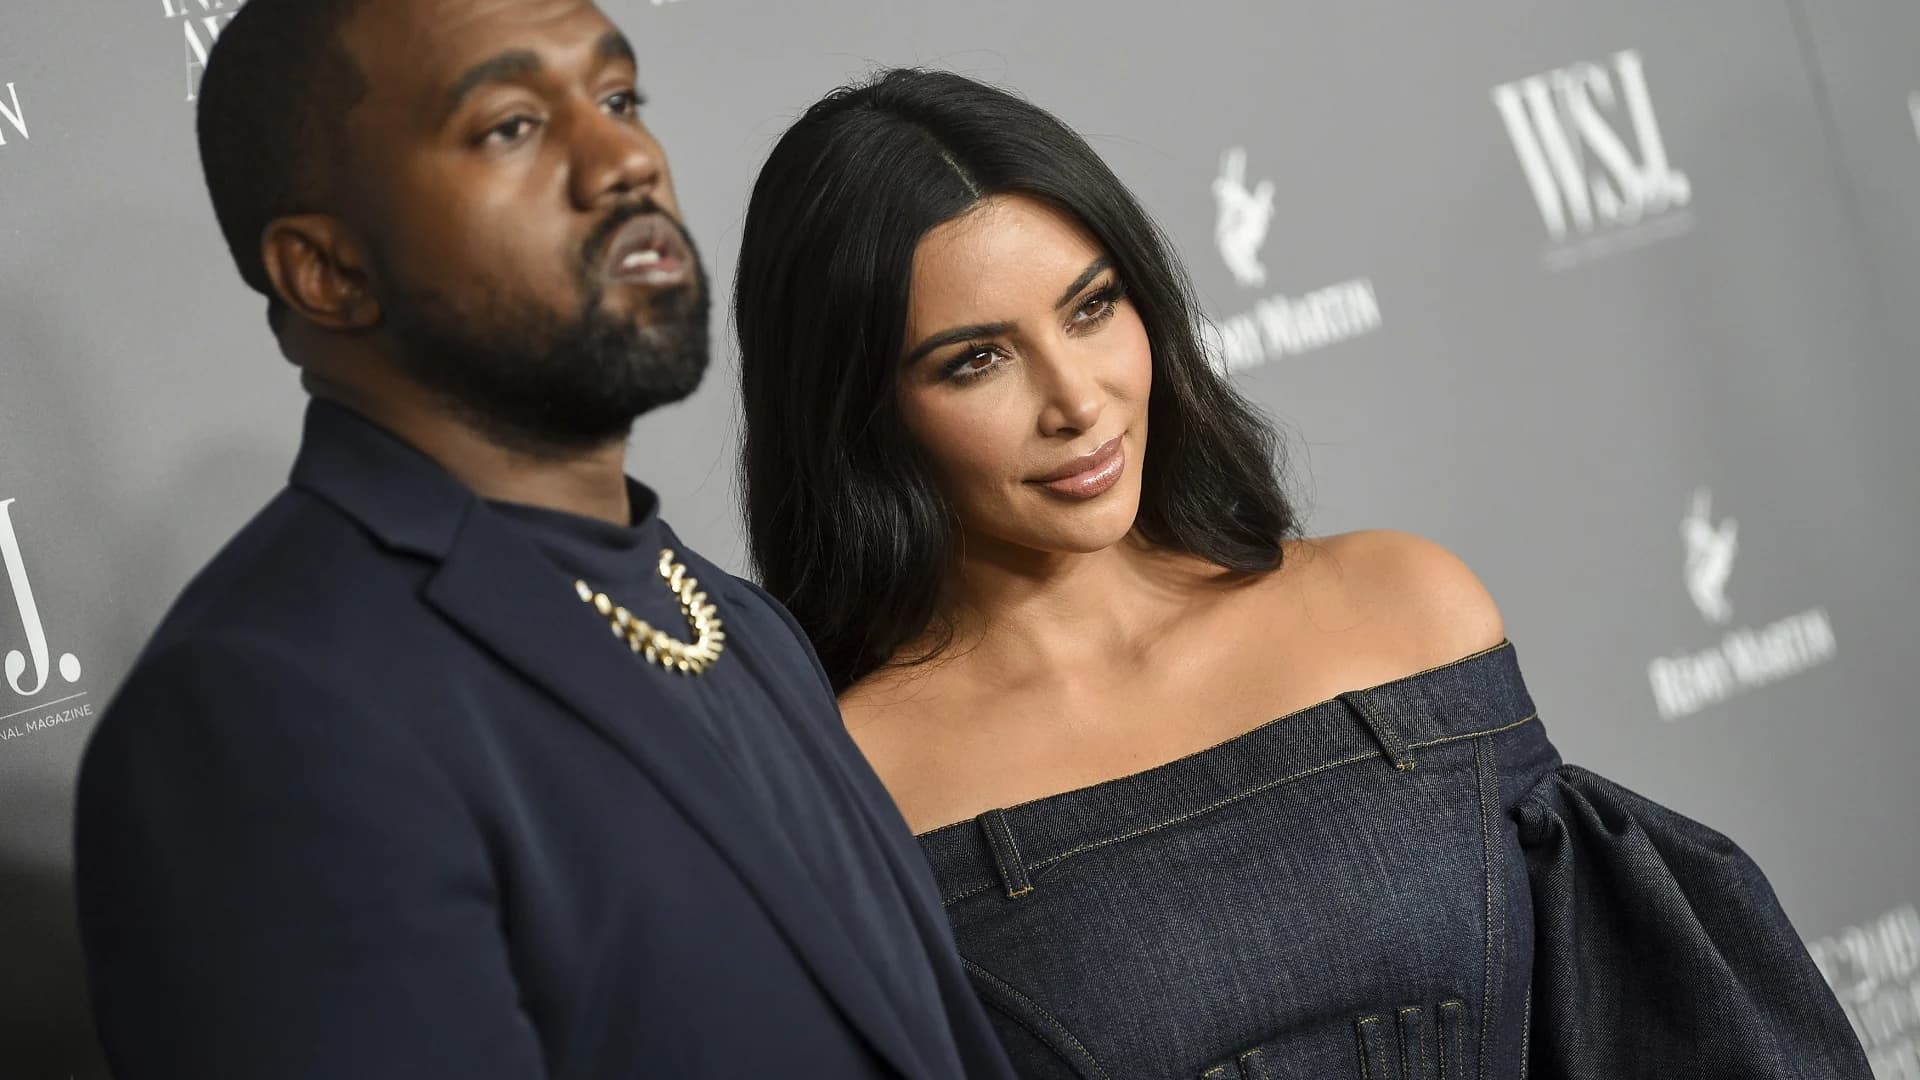 'Kimye' is no more: Kim Kardashian files to divorce Kanye West